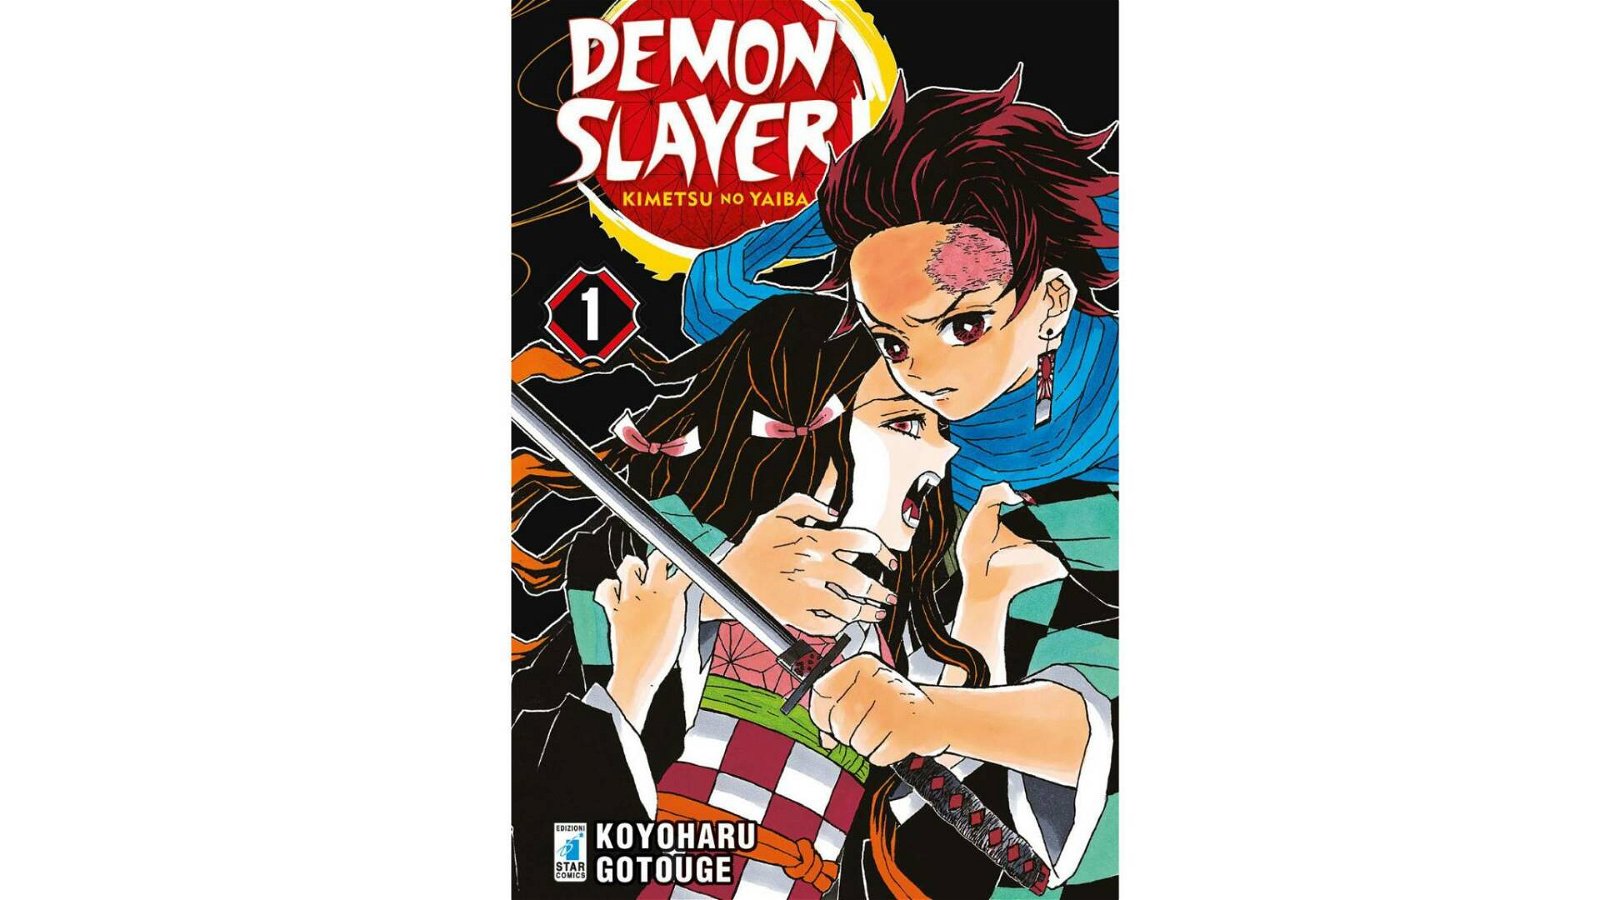 Chega ao fim mangá de Demon Slayer – POPZONE